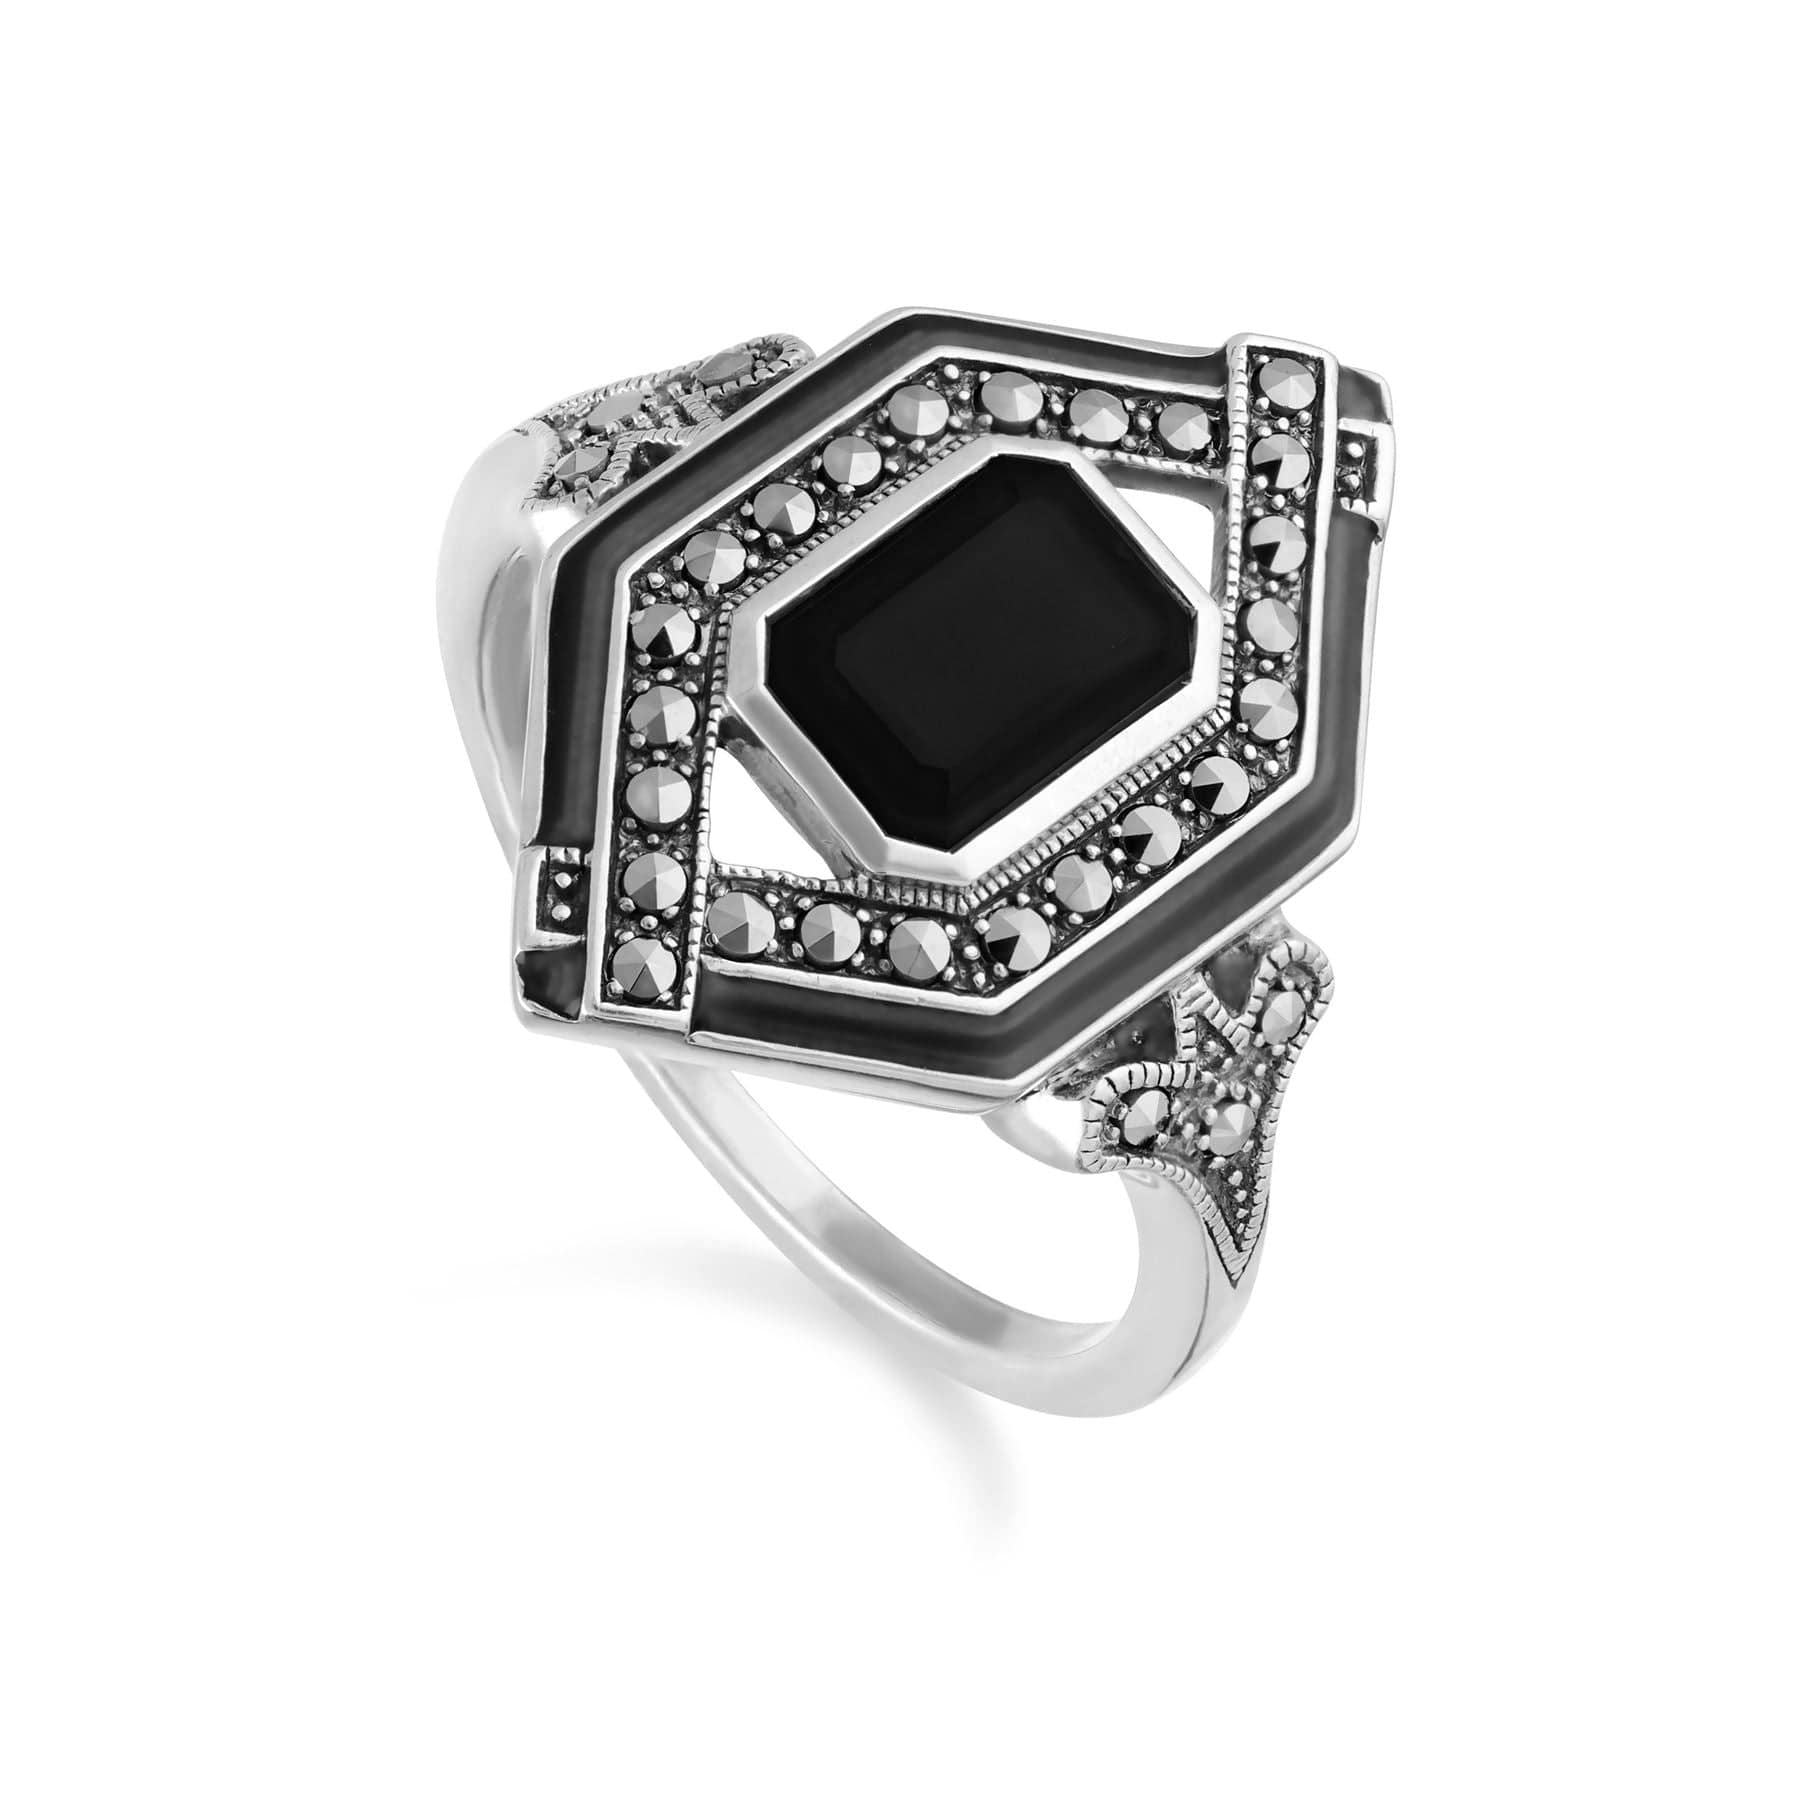 Art Deco Inspired Spinel, Enamel & Marcasite Rhombus Ring In Sterling Silver - Gemondo